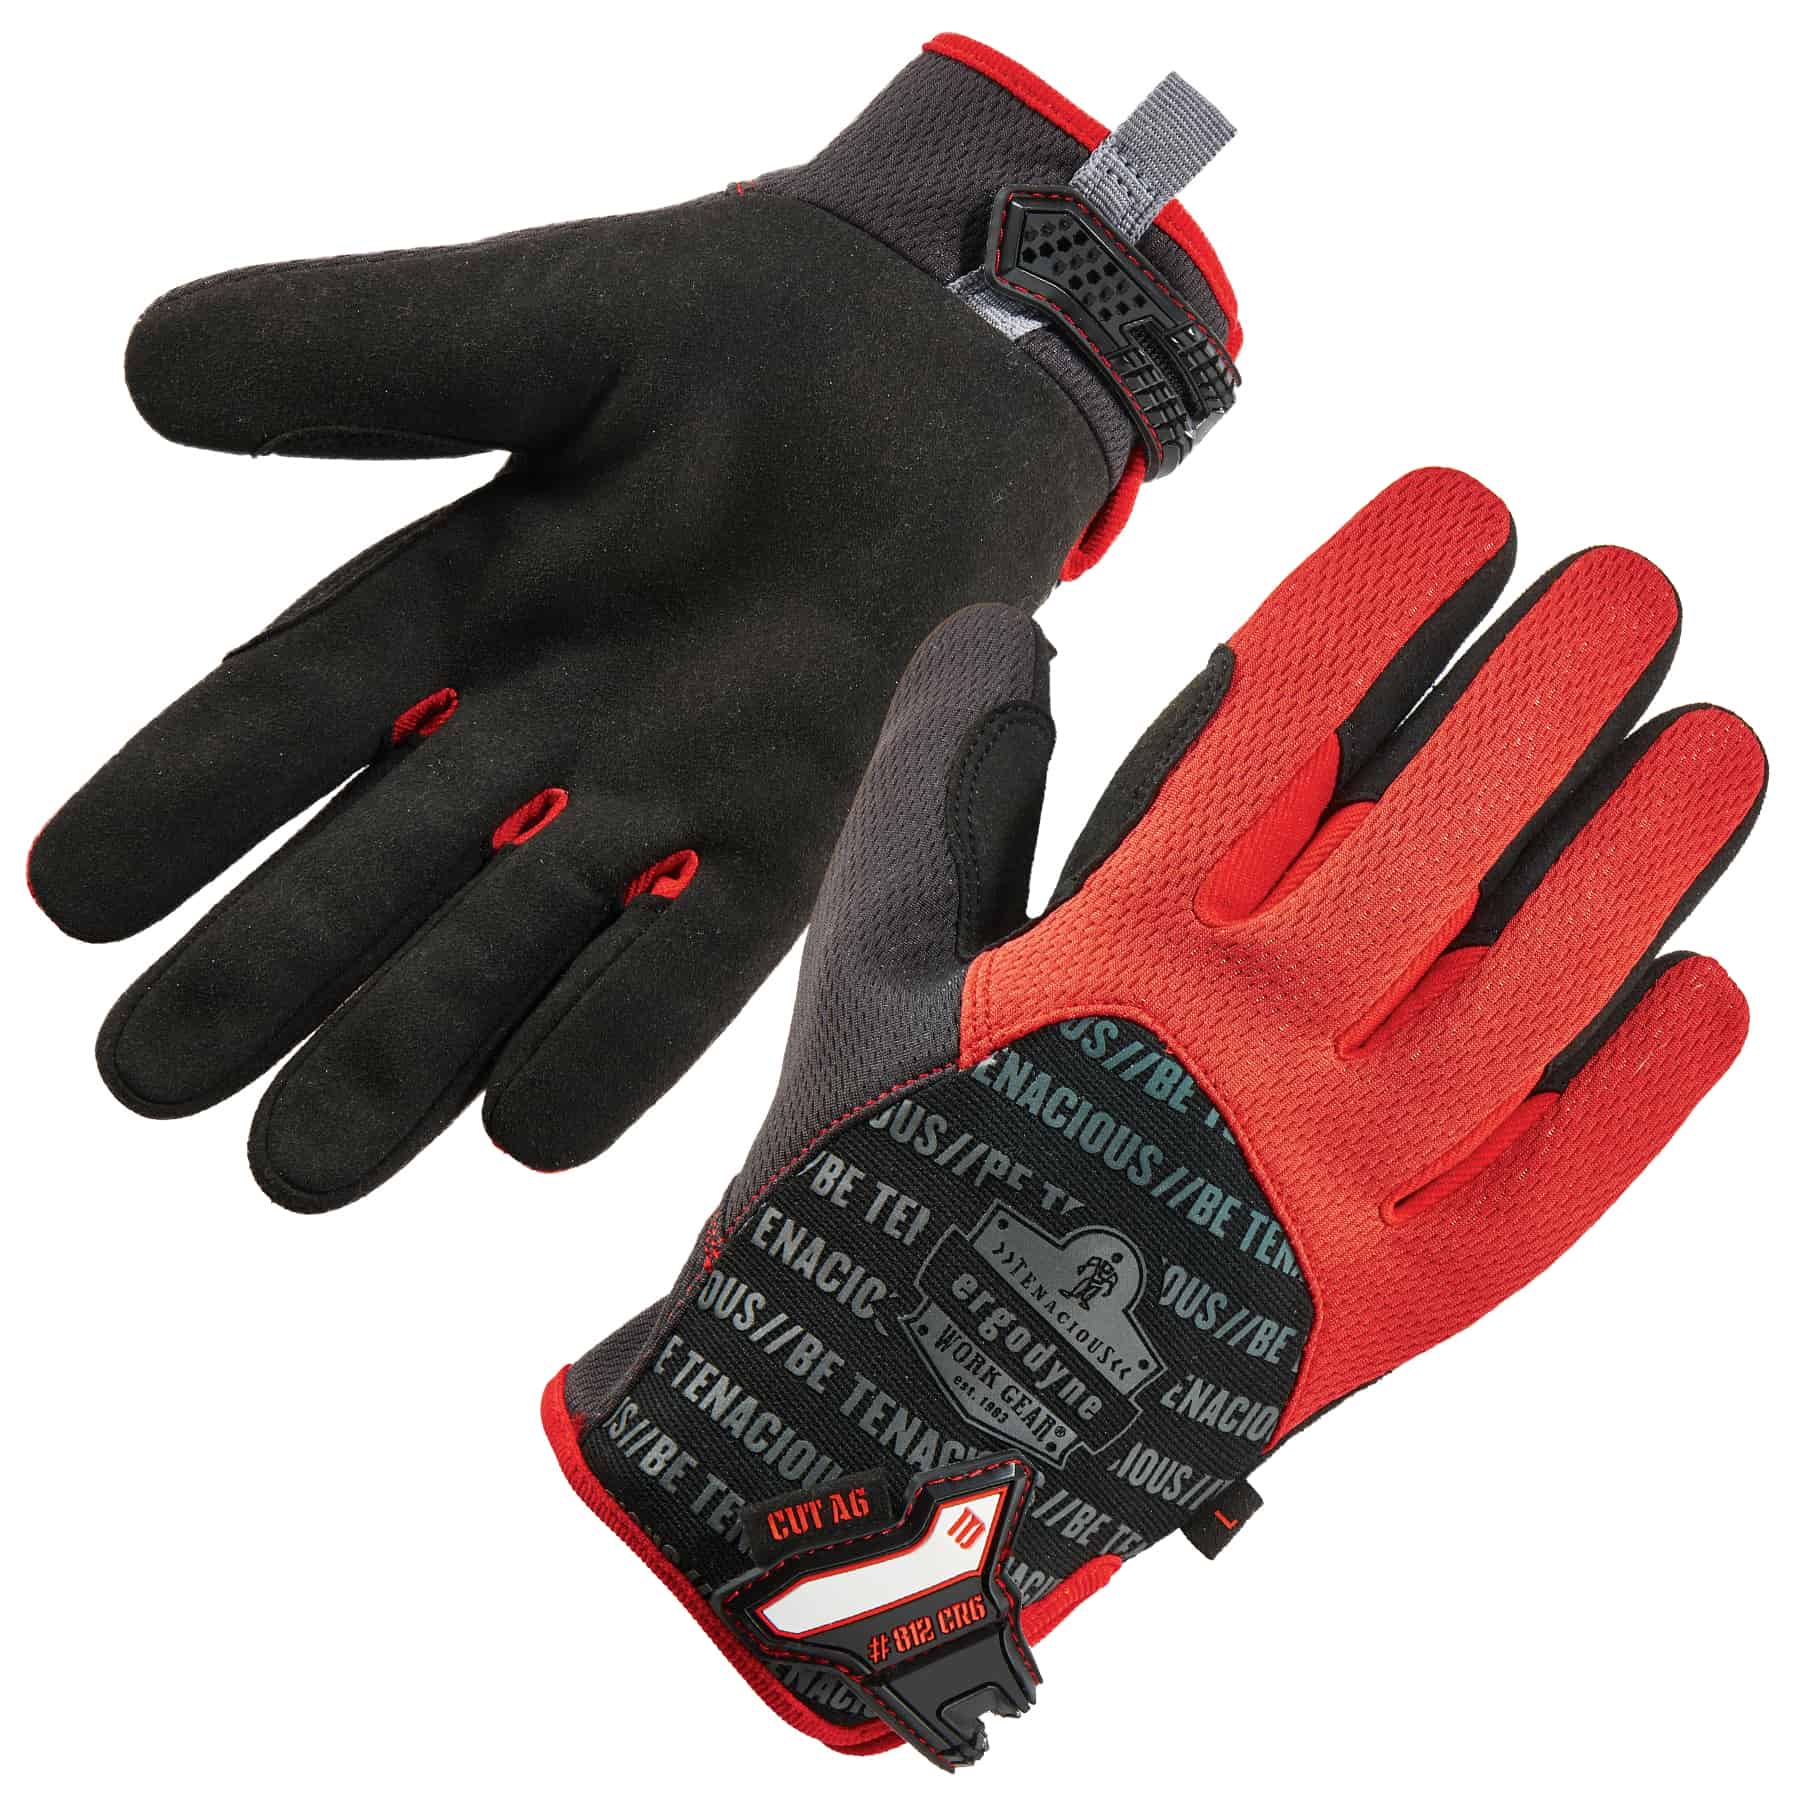 Grease Monkey Mechanics Utility Gloves, 3 Pair of work gloves